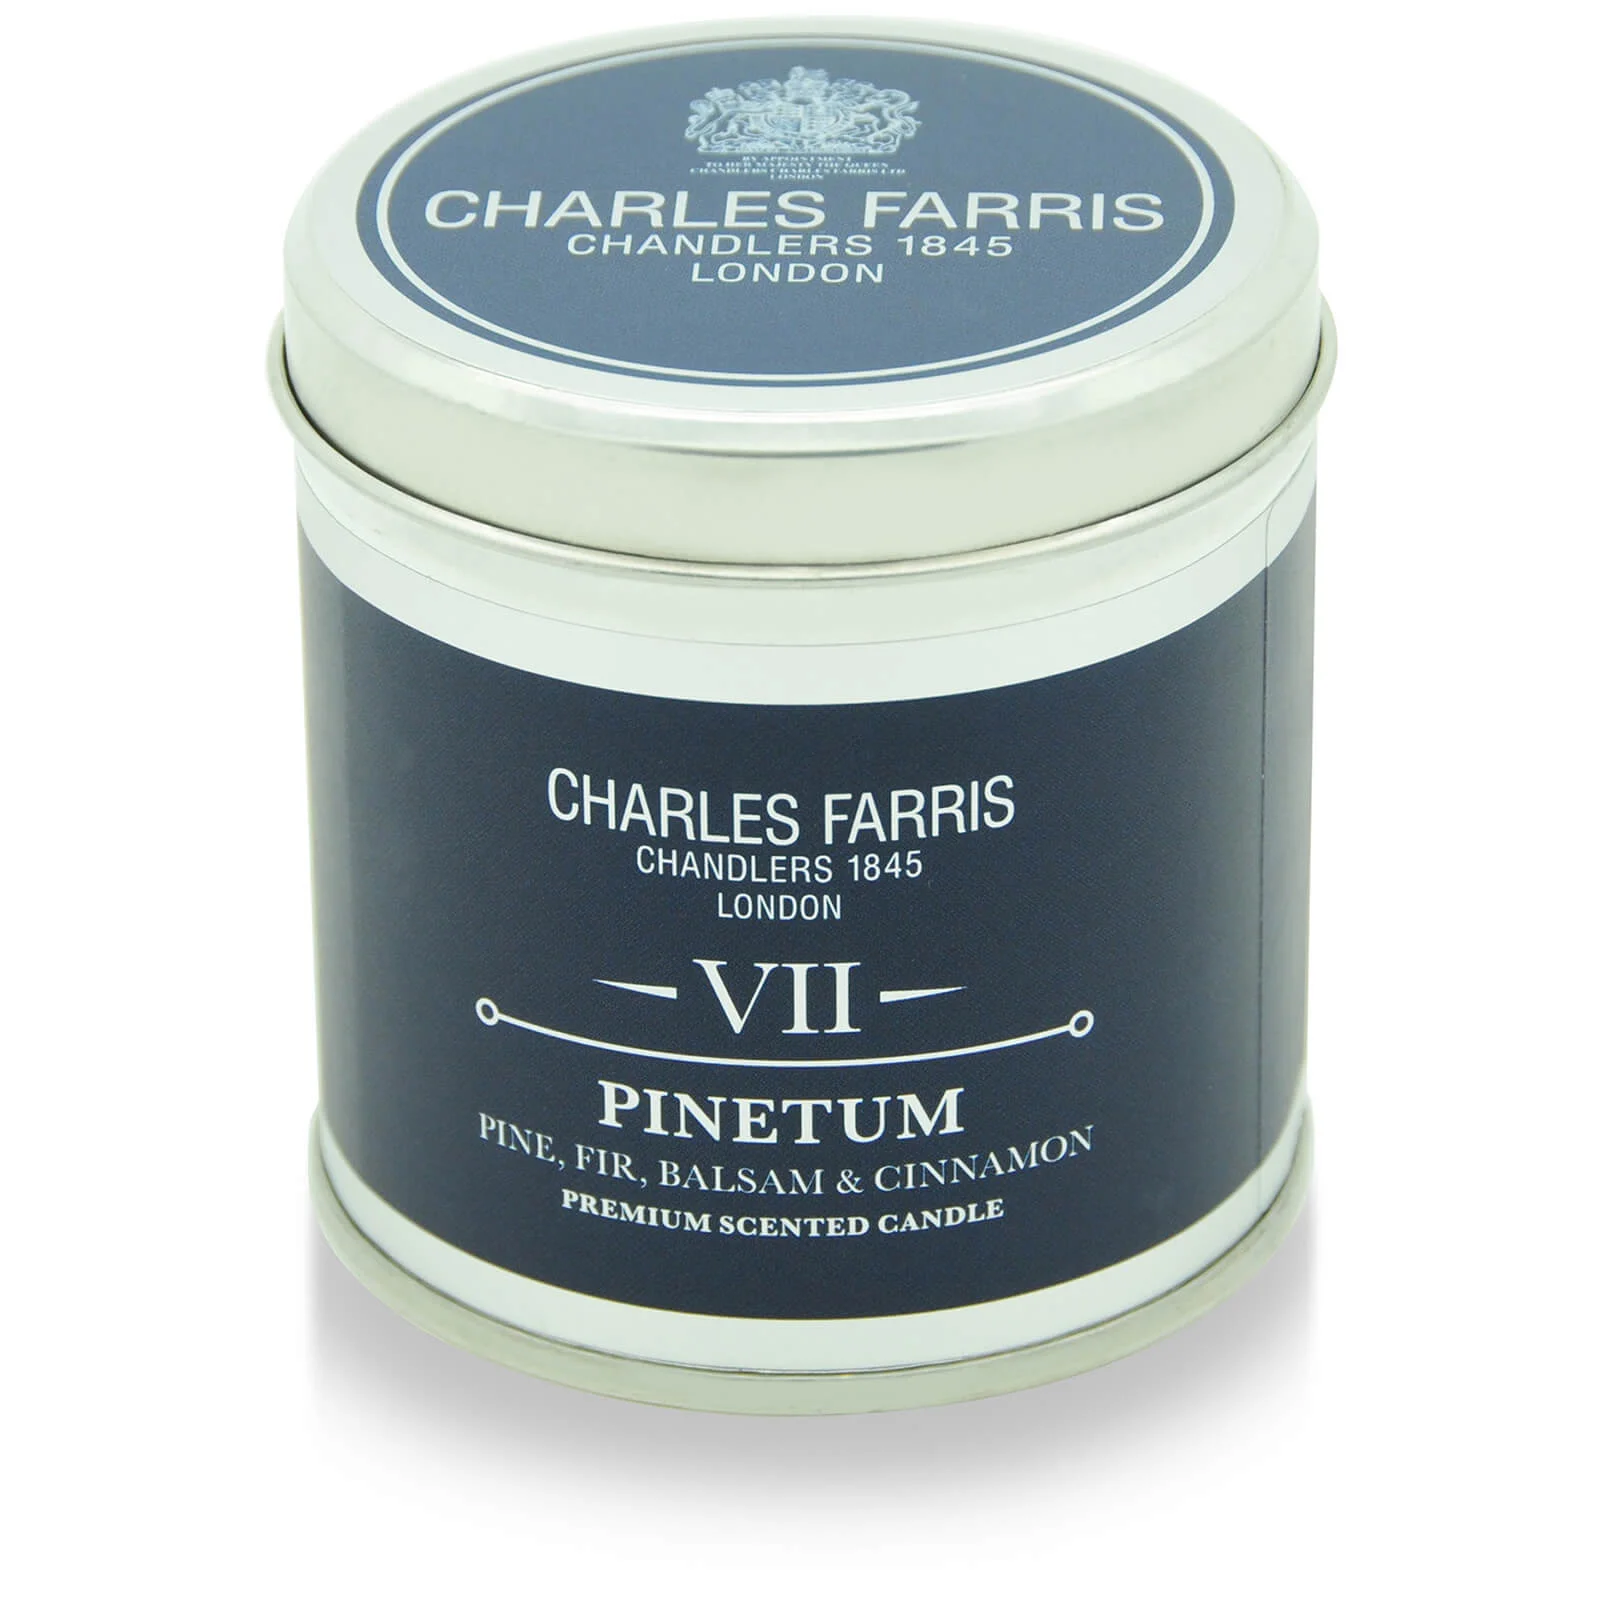 Charles Farris Signature Pinetum Tin Candle 300g Image 1